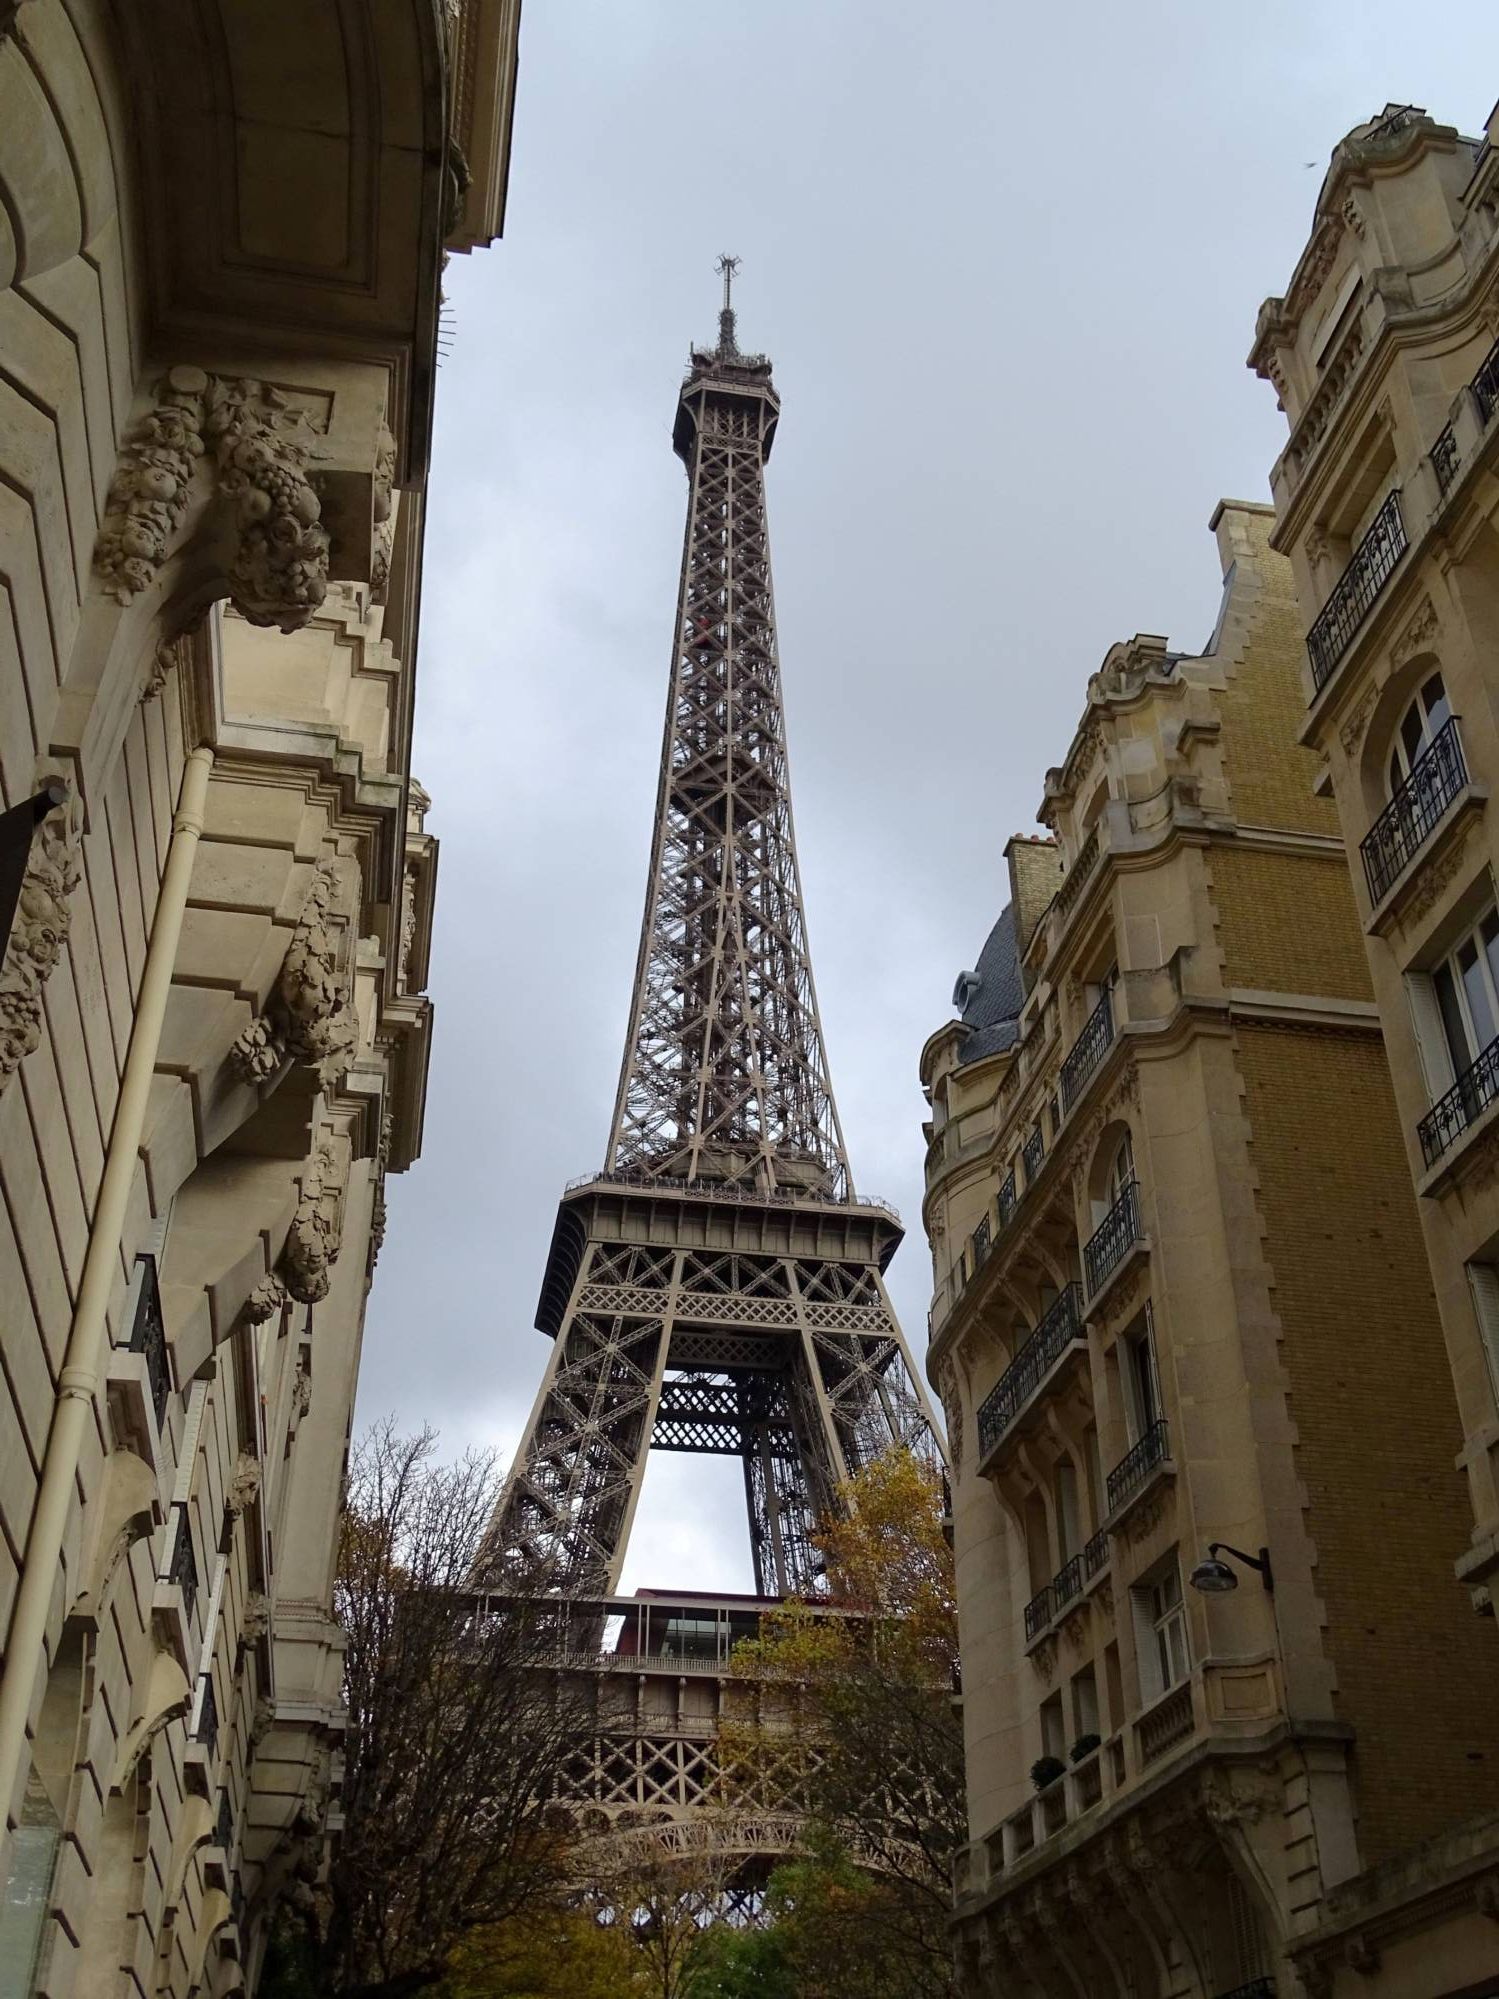 Explore the city of Paris while visiting Disneyland Paris |PassPorter.com